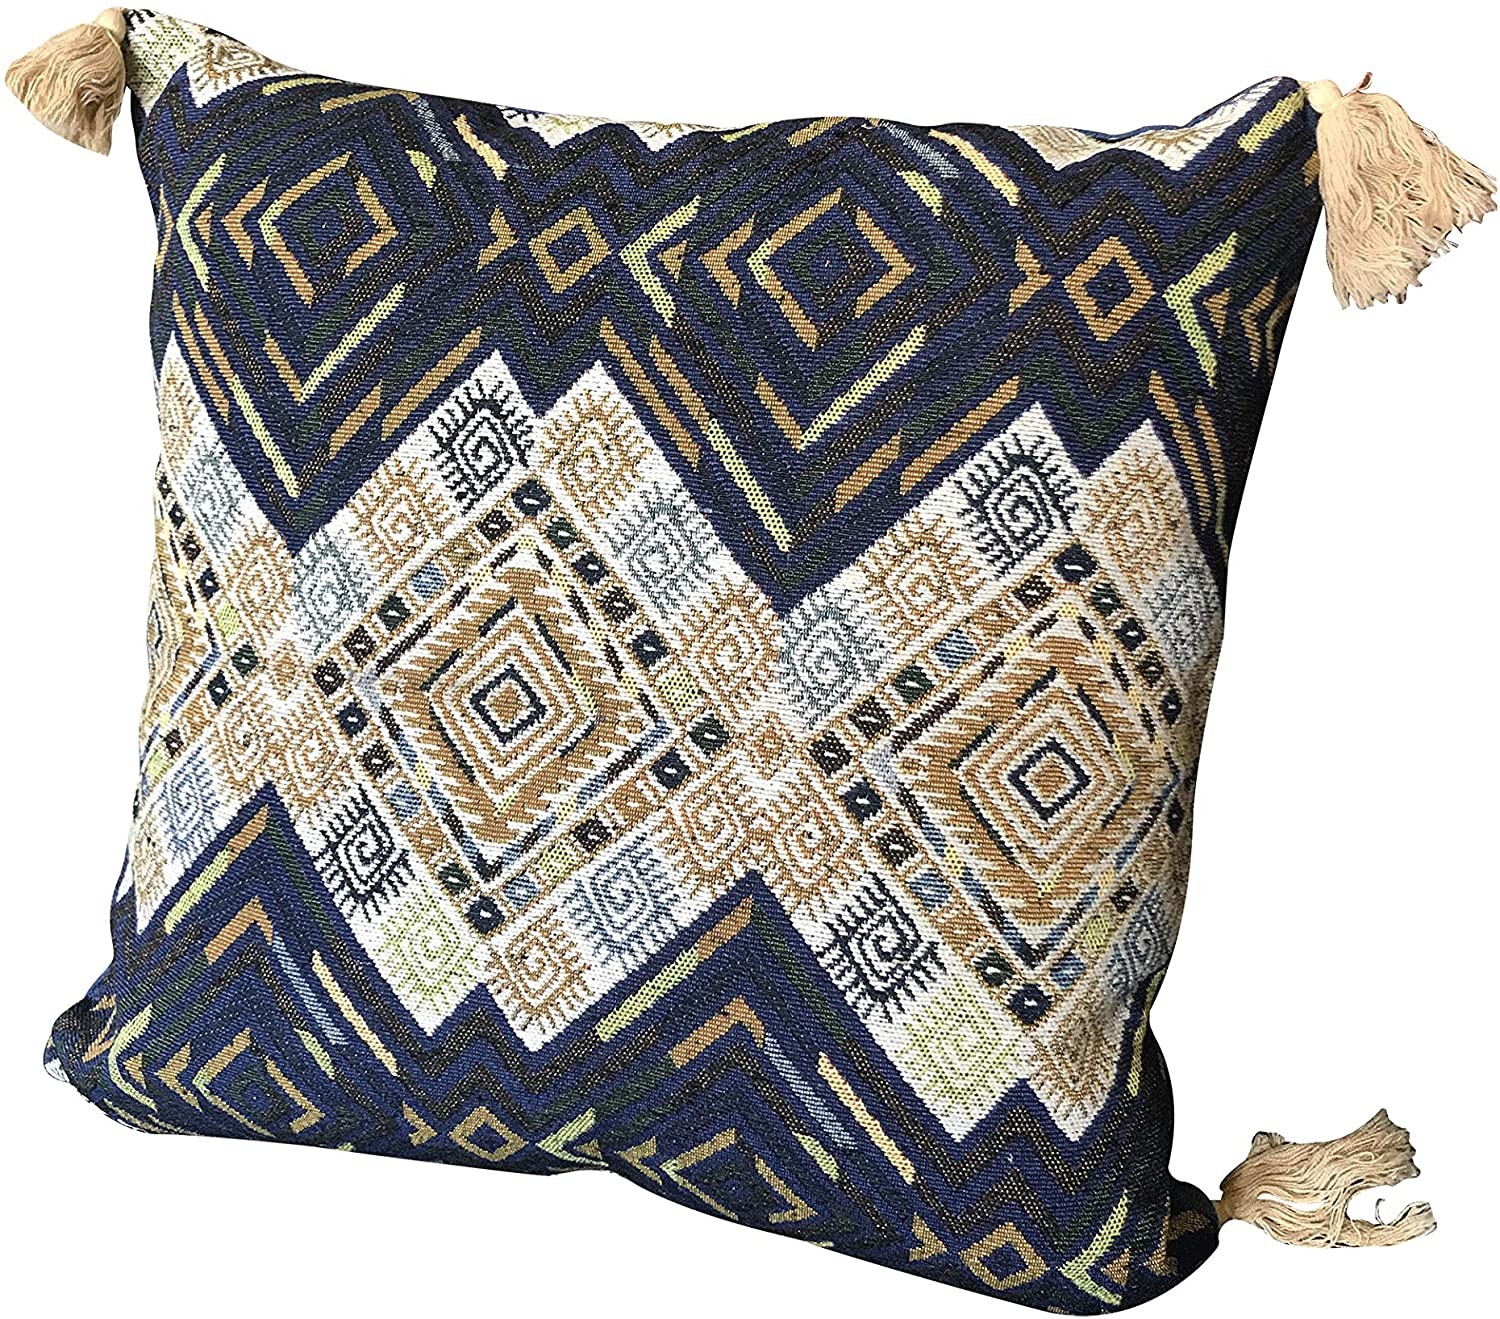 https://www.decorshore.com/1499/throw-pillow-cover-tribal-boho-woven-pillowcase-tassels-soft-square-pillow-sham-blue-multicolor.jpg